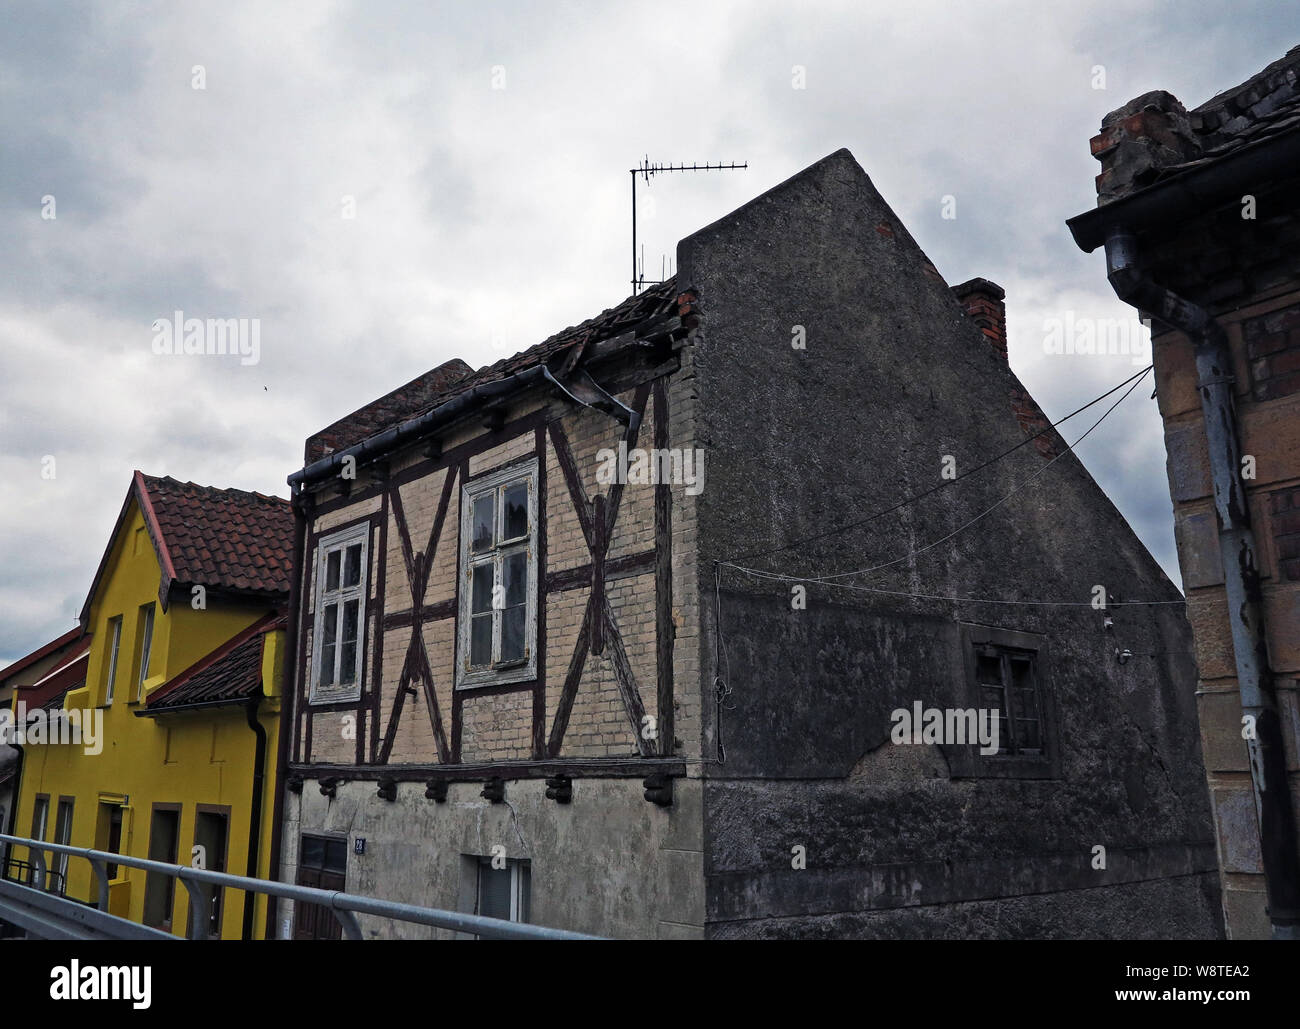 Buergerhaus pre-guerra en la ciudad de Mikolajki (Nikolaiken) en el polaco de Masuria (antigua Ostpreussen), registrada en 18.07.2019 | mundial de uso Foto de stock